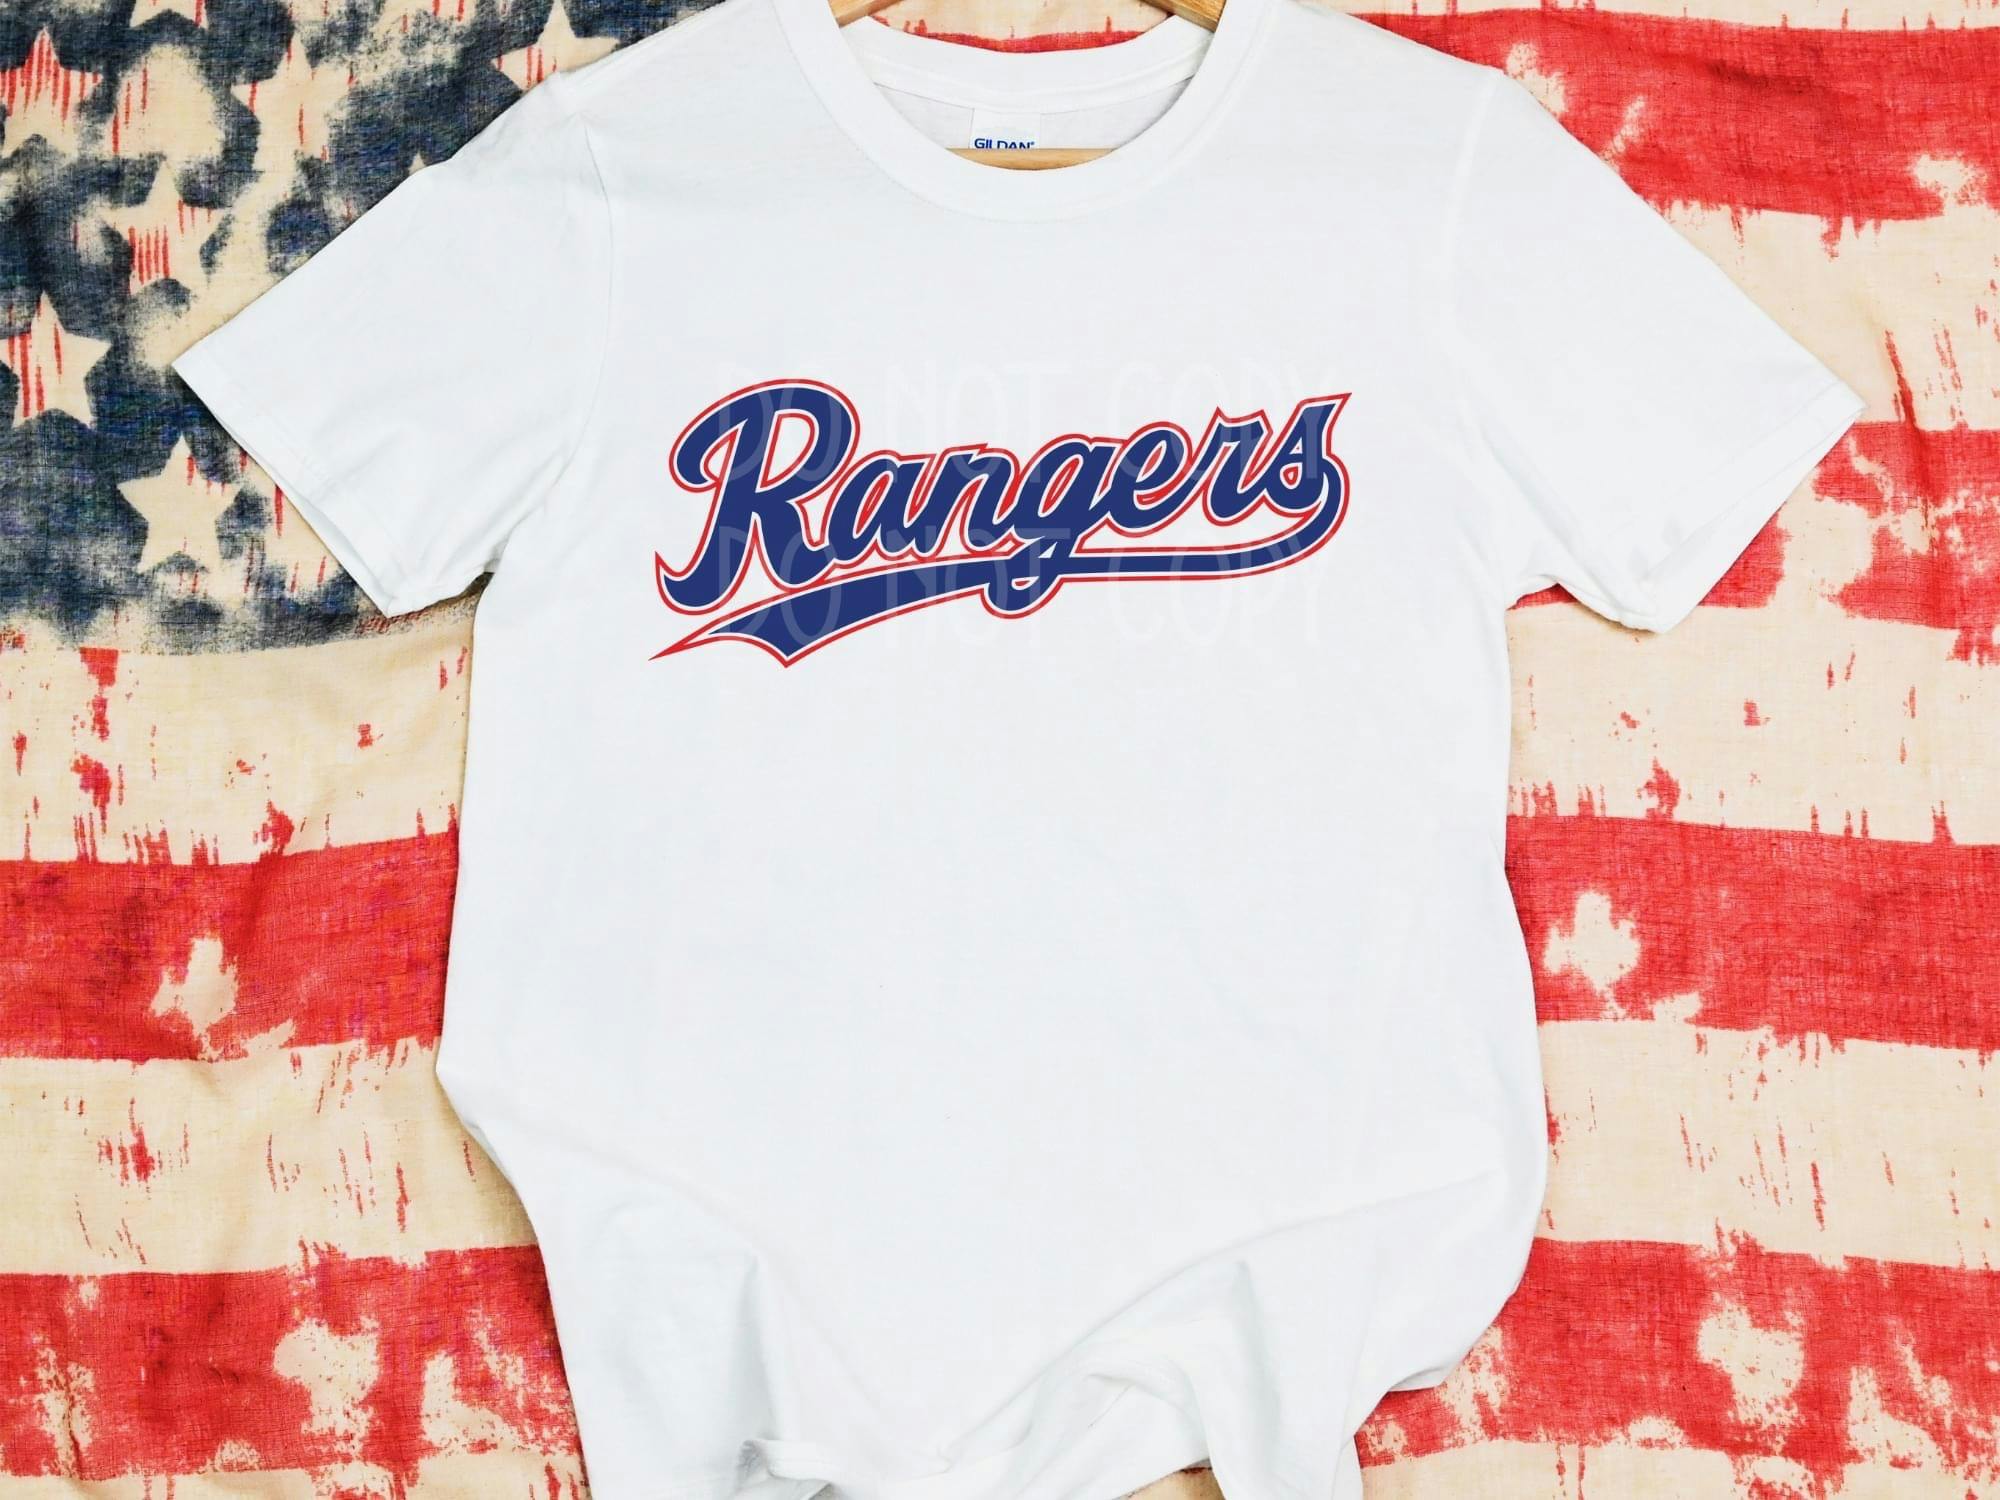 Rangers baseball T-shirt 